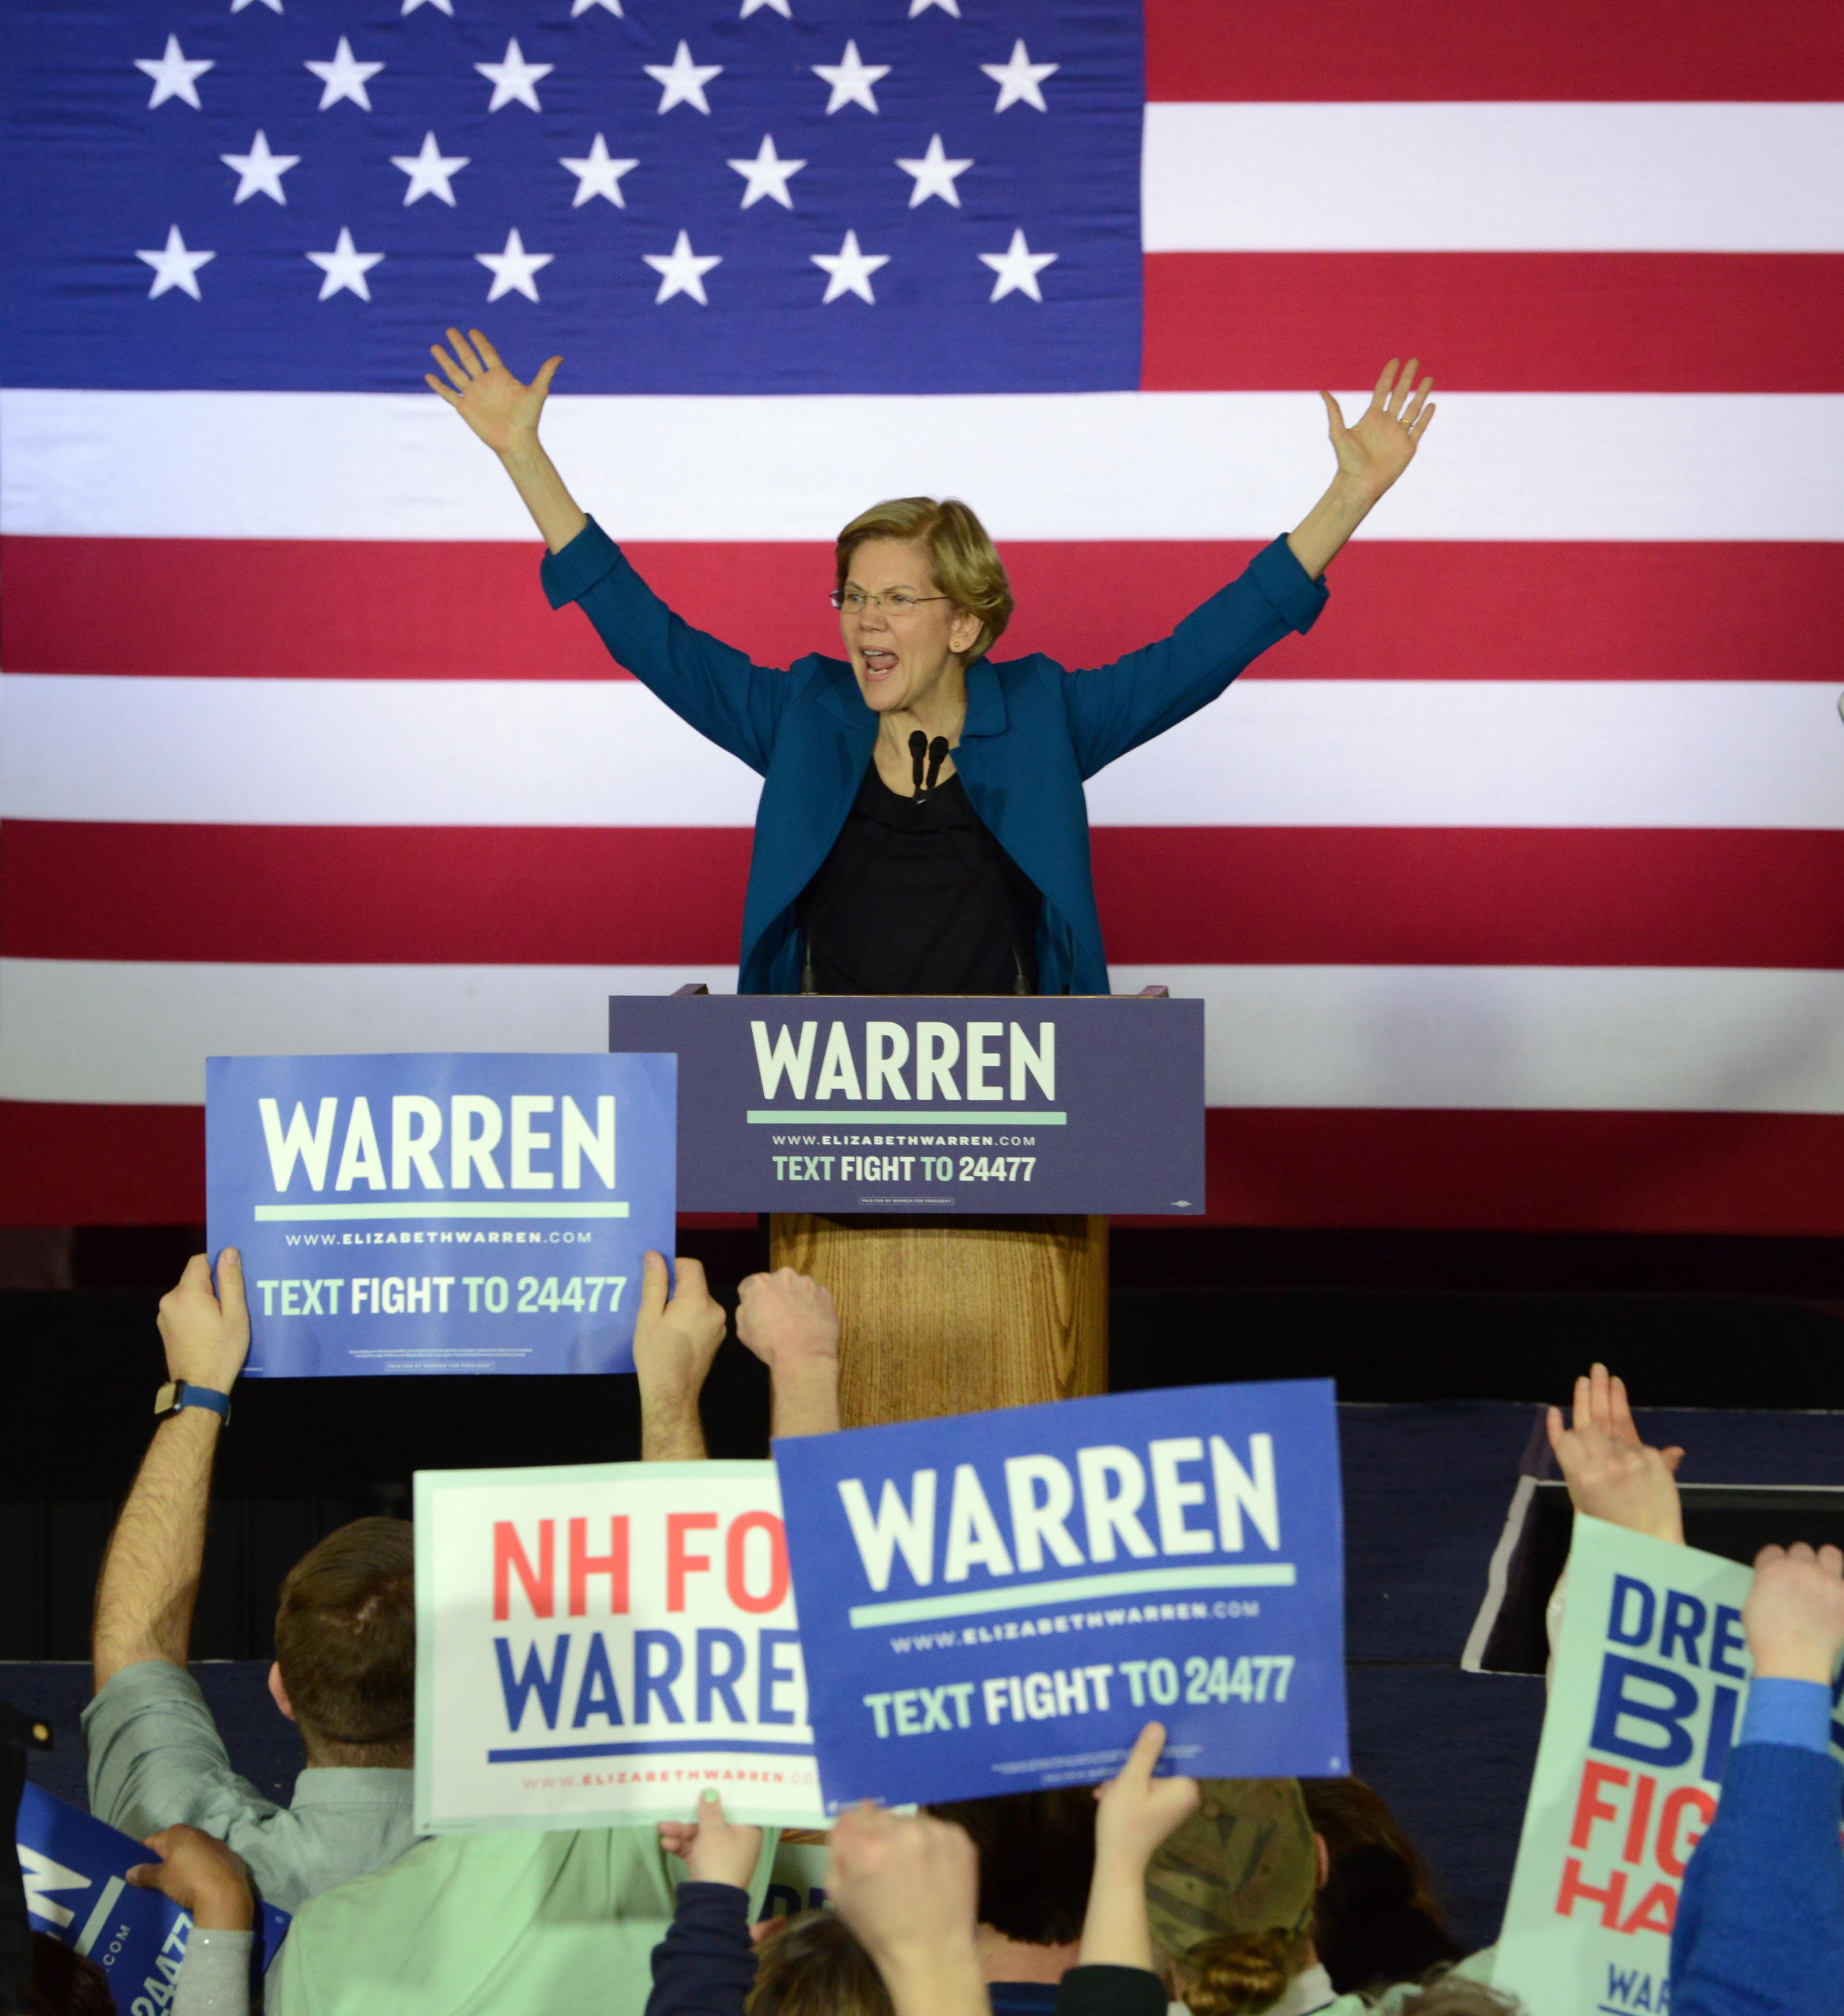 La senatrice Elizabeth Warren, grande favorita, è rimasta ferma al 9,4%